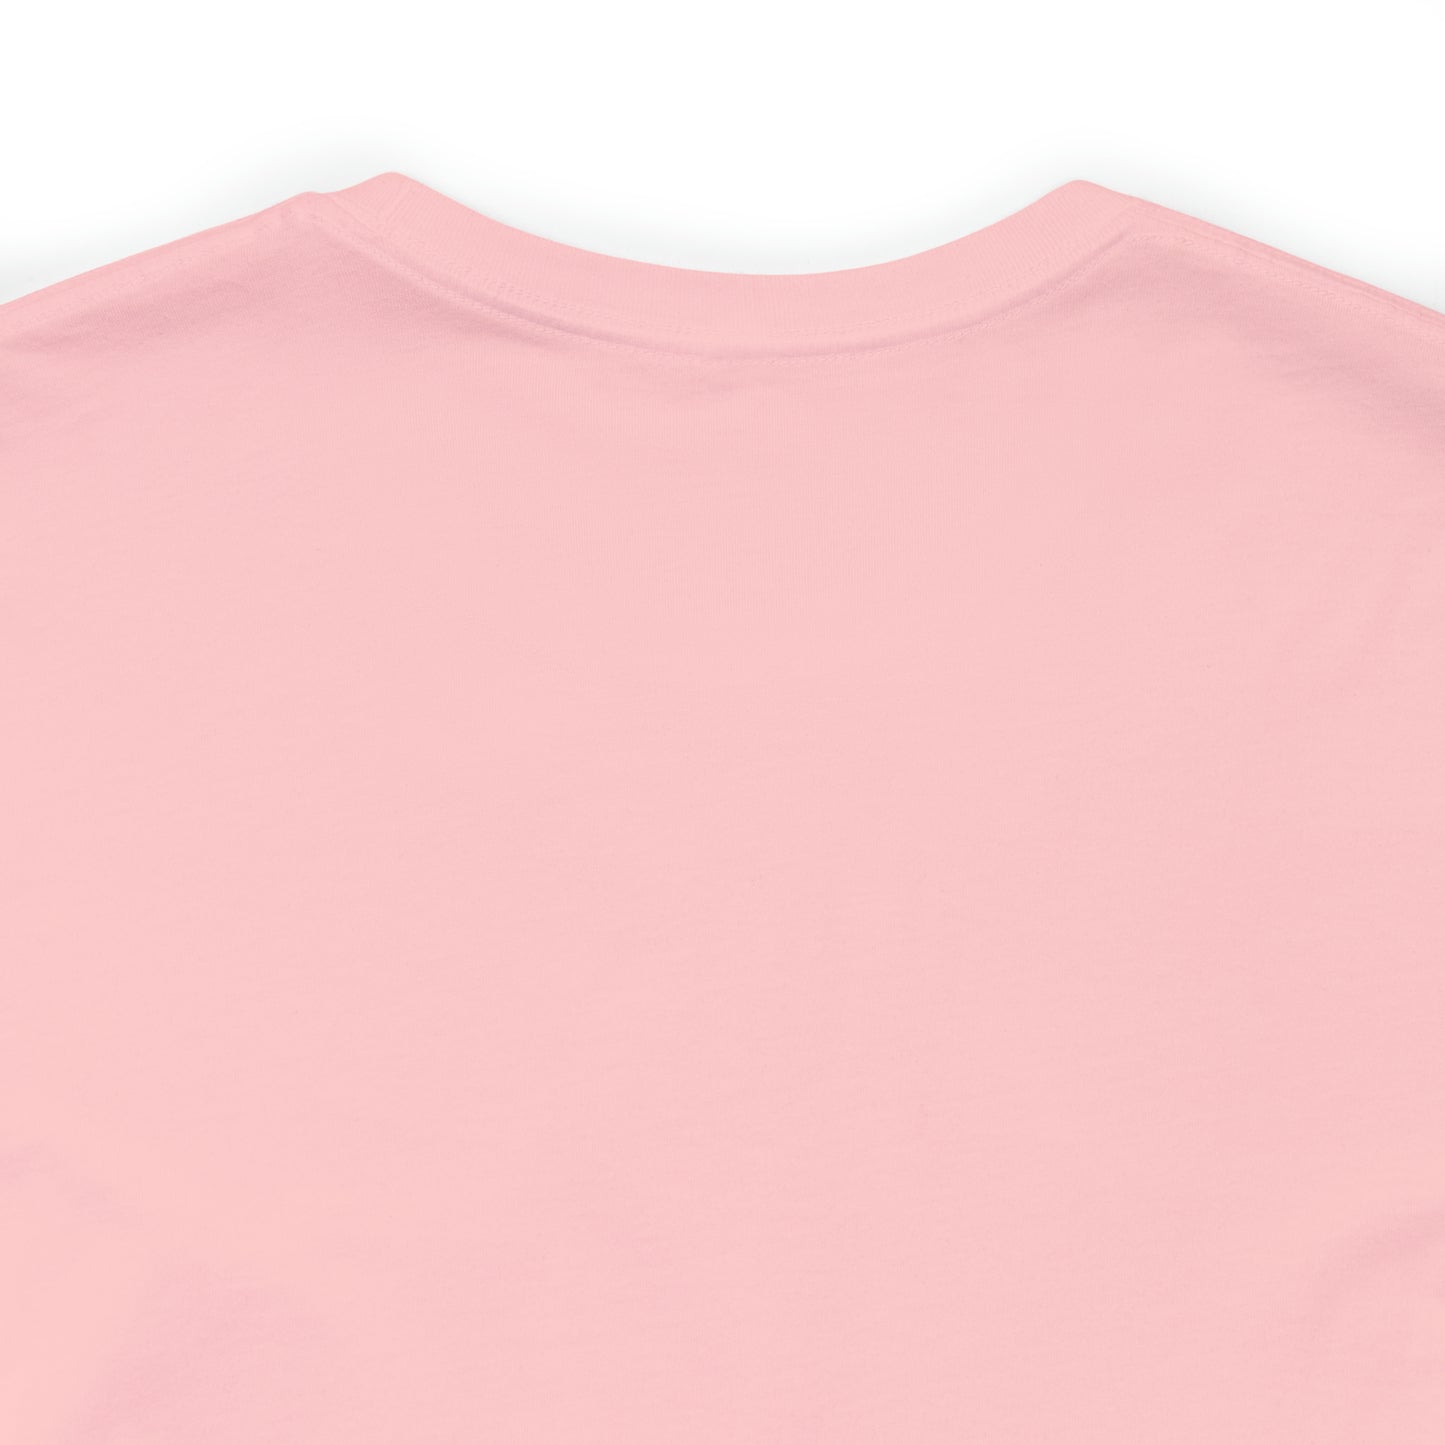 Kpop Custom Shirt Jennie Blinks Unisex Jersey Short Sleeve Tee